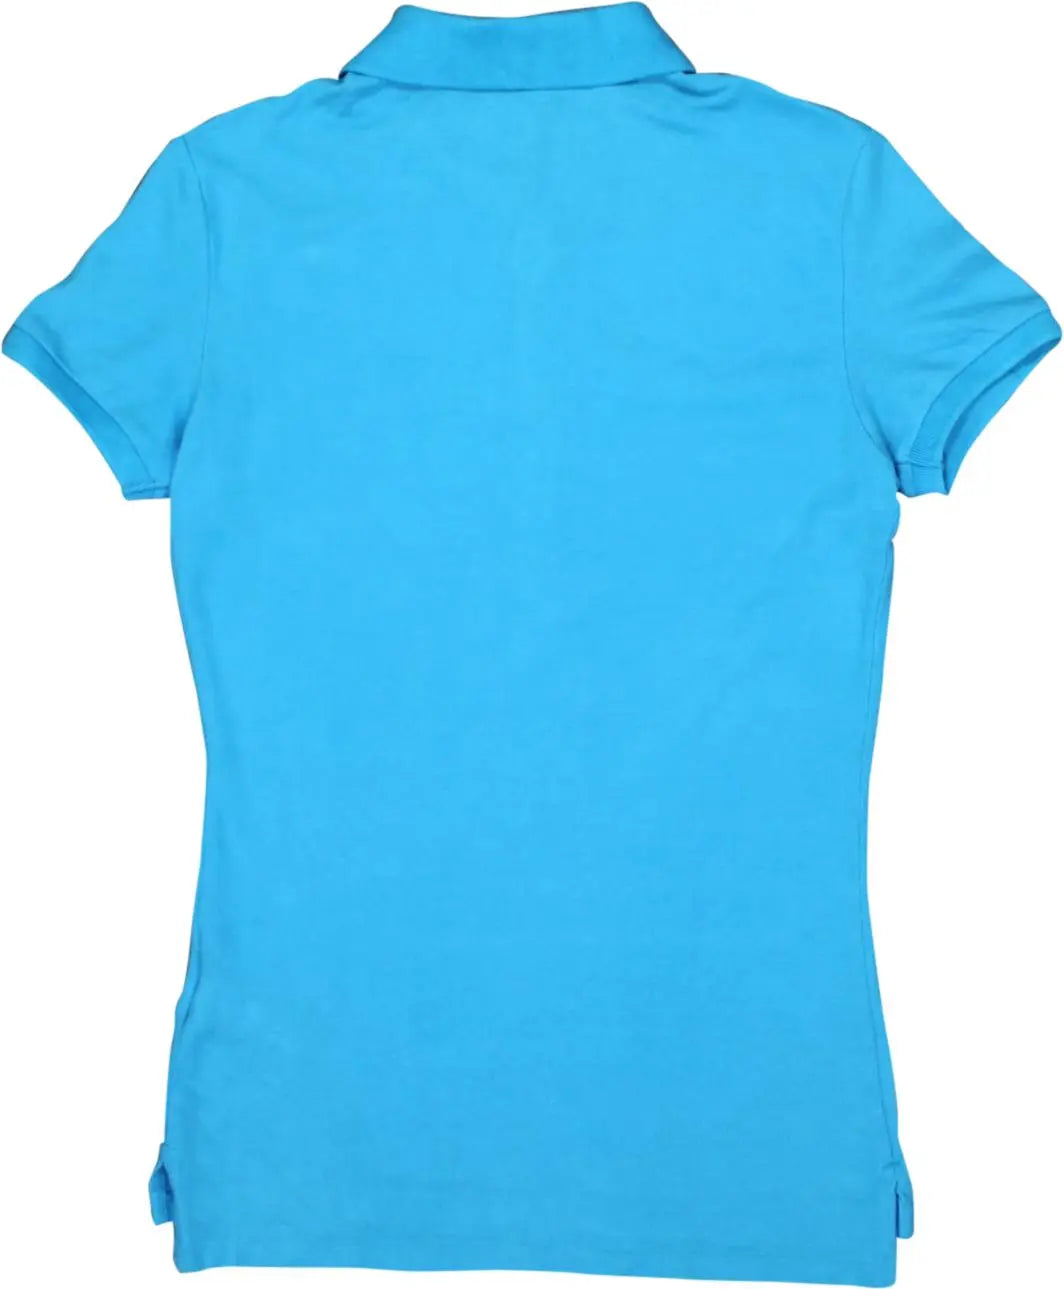 Ralph Lauren - Blue Polo Shirt by Ralph Lauren- ThriftTale.com - Vintage and second handclothing